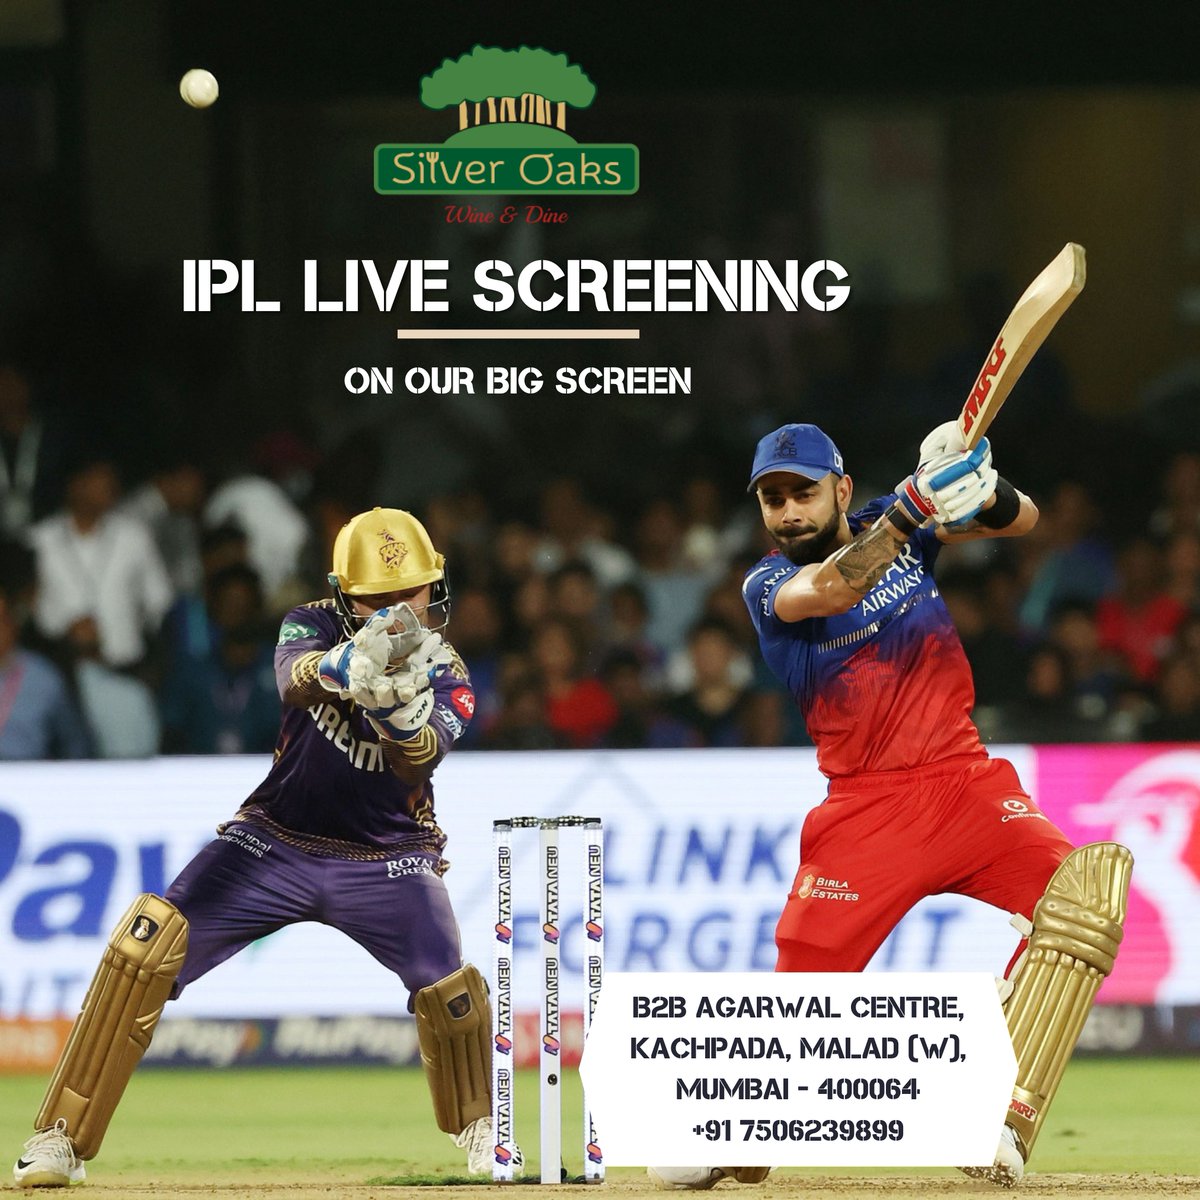 #LandmarkGroupOfHotels #LandmarkGroup #LandmarkGroupMumbai  #IPL #Cricket #IPLLive #LiveIPL #CricketUpdates #CricketFans #CricketLive #LiveCricket #ipl2024updates #ilplivescreening #IPLFever #IPL2024 #IPLCombo #LiveScreening #CheerForYourTeam #ChennaiSuperKings #DelhiCapitals